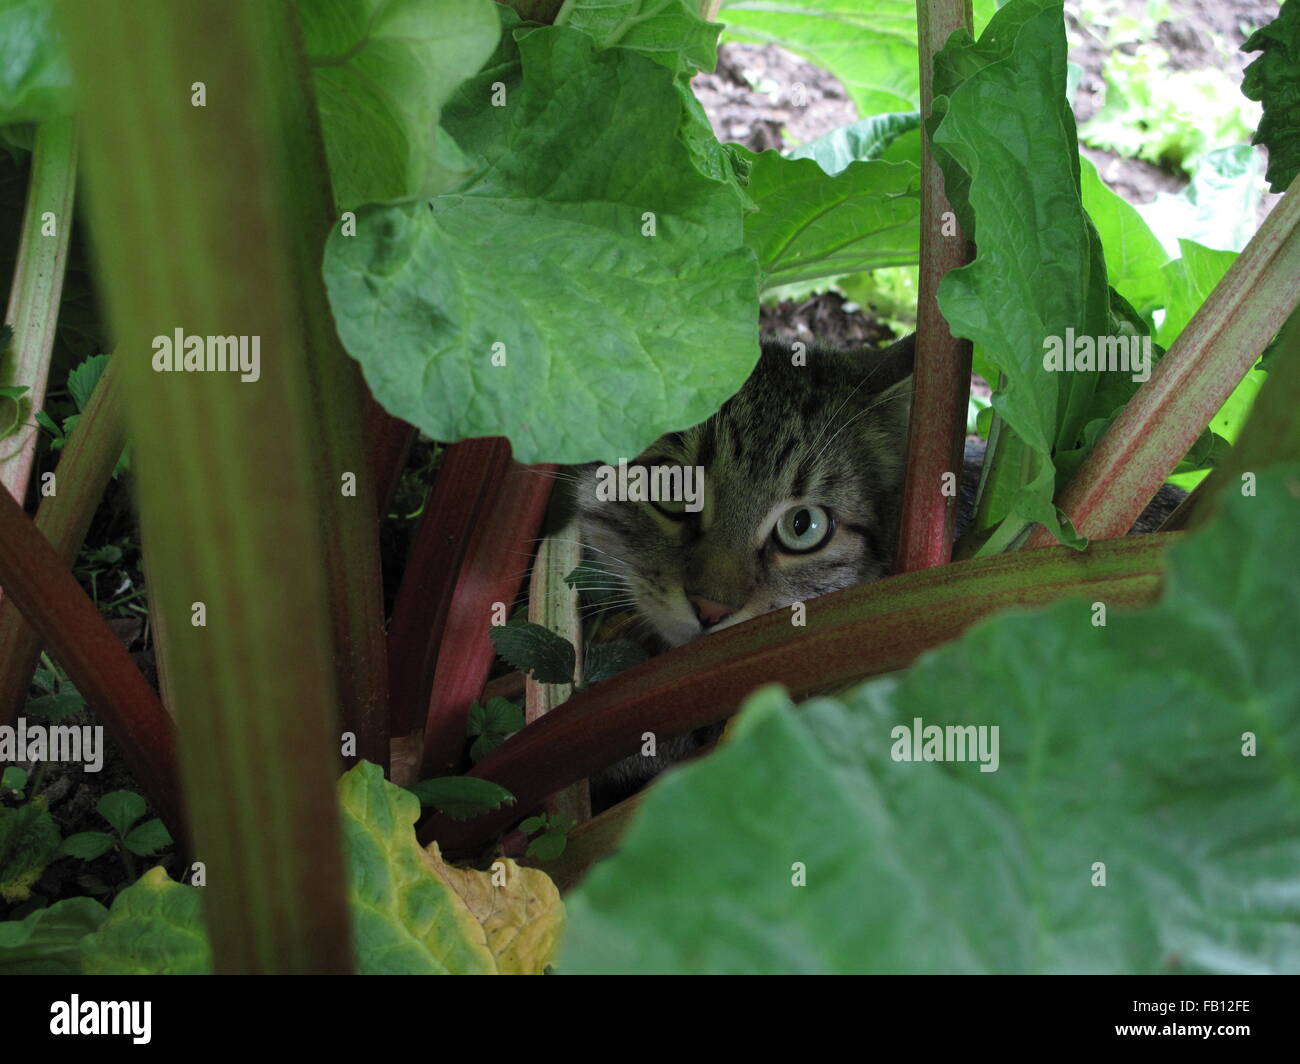 Tabby cat peeking through rhubarb in vegetable patch Stock Photo